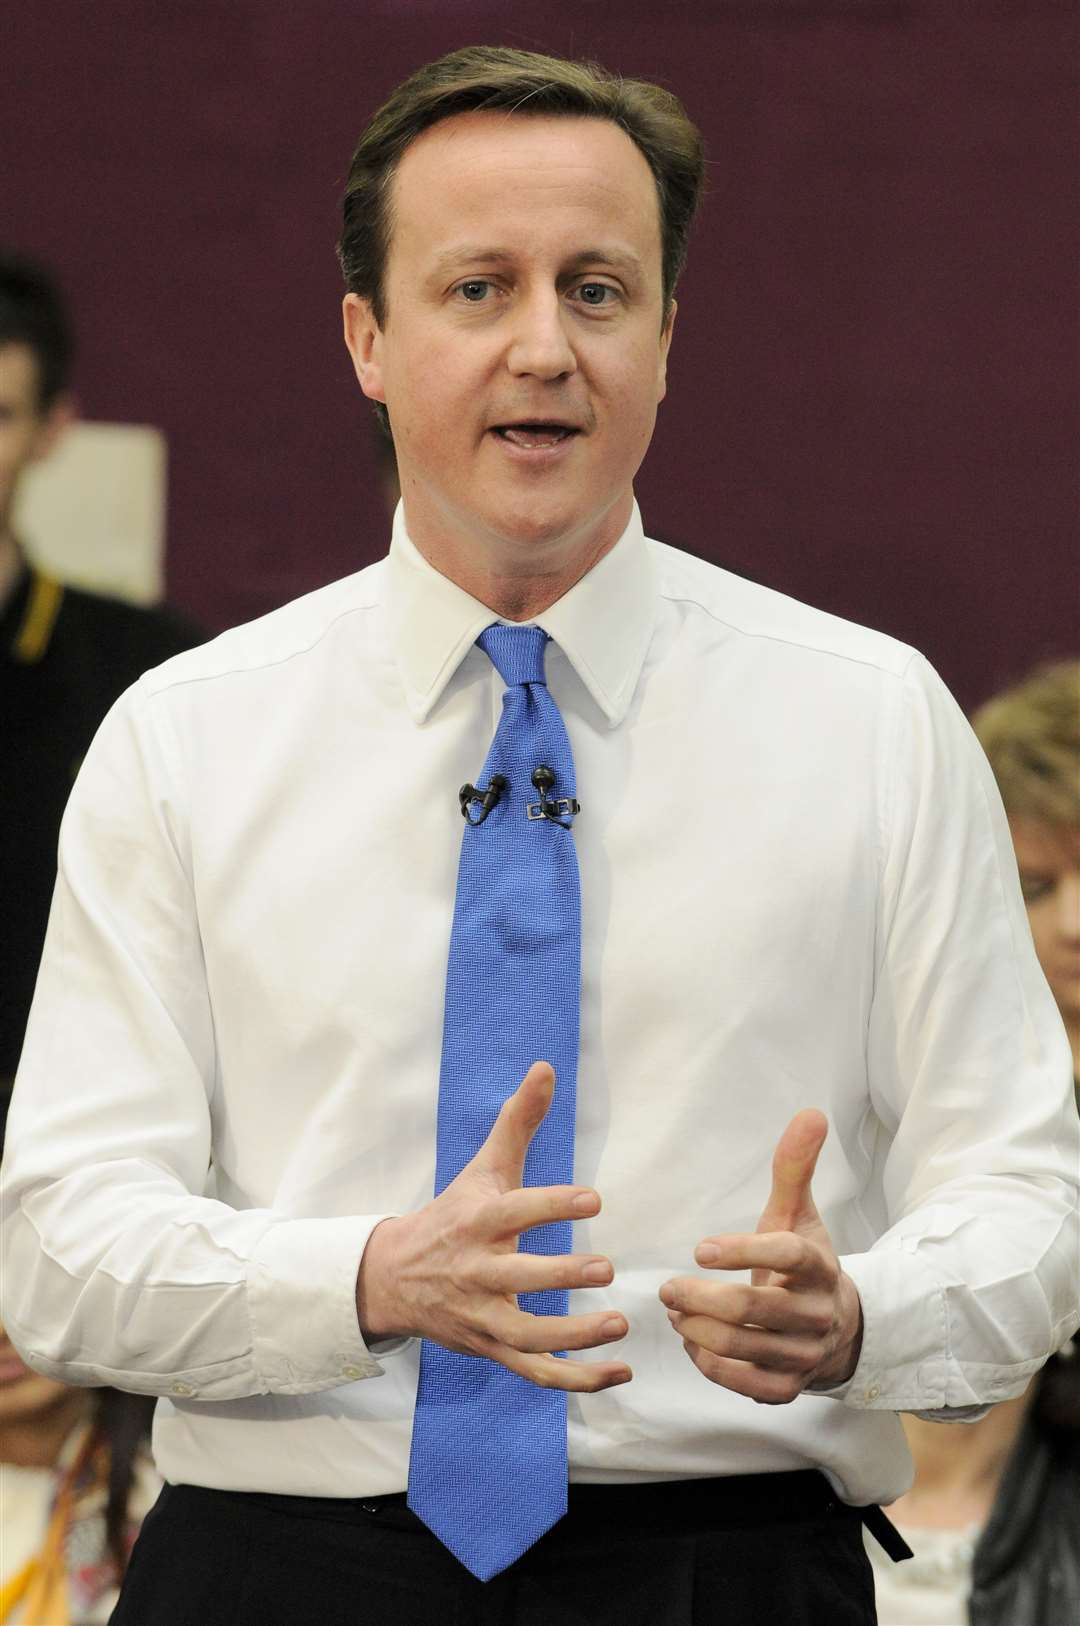 Prime Minister David Cameron has pledged 500 free schools